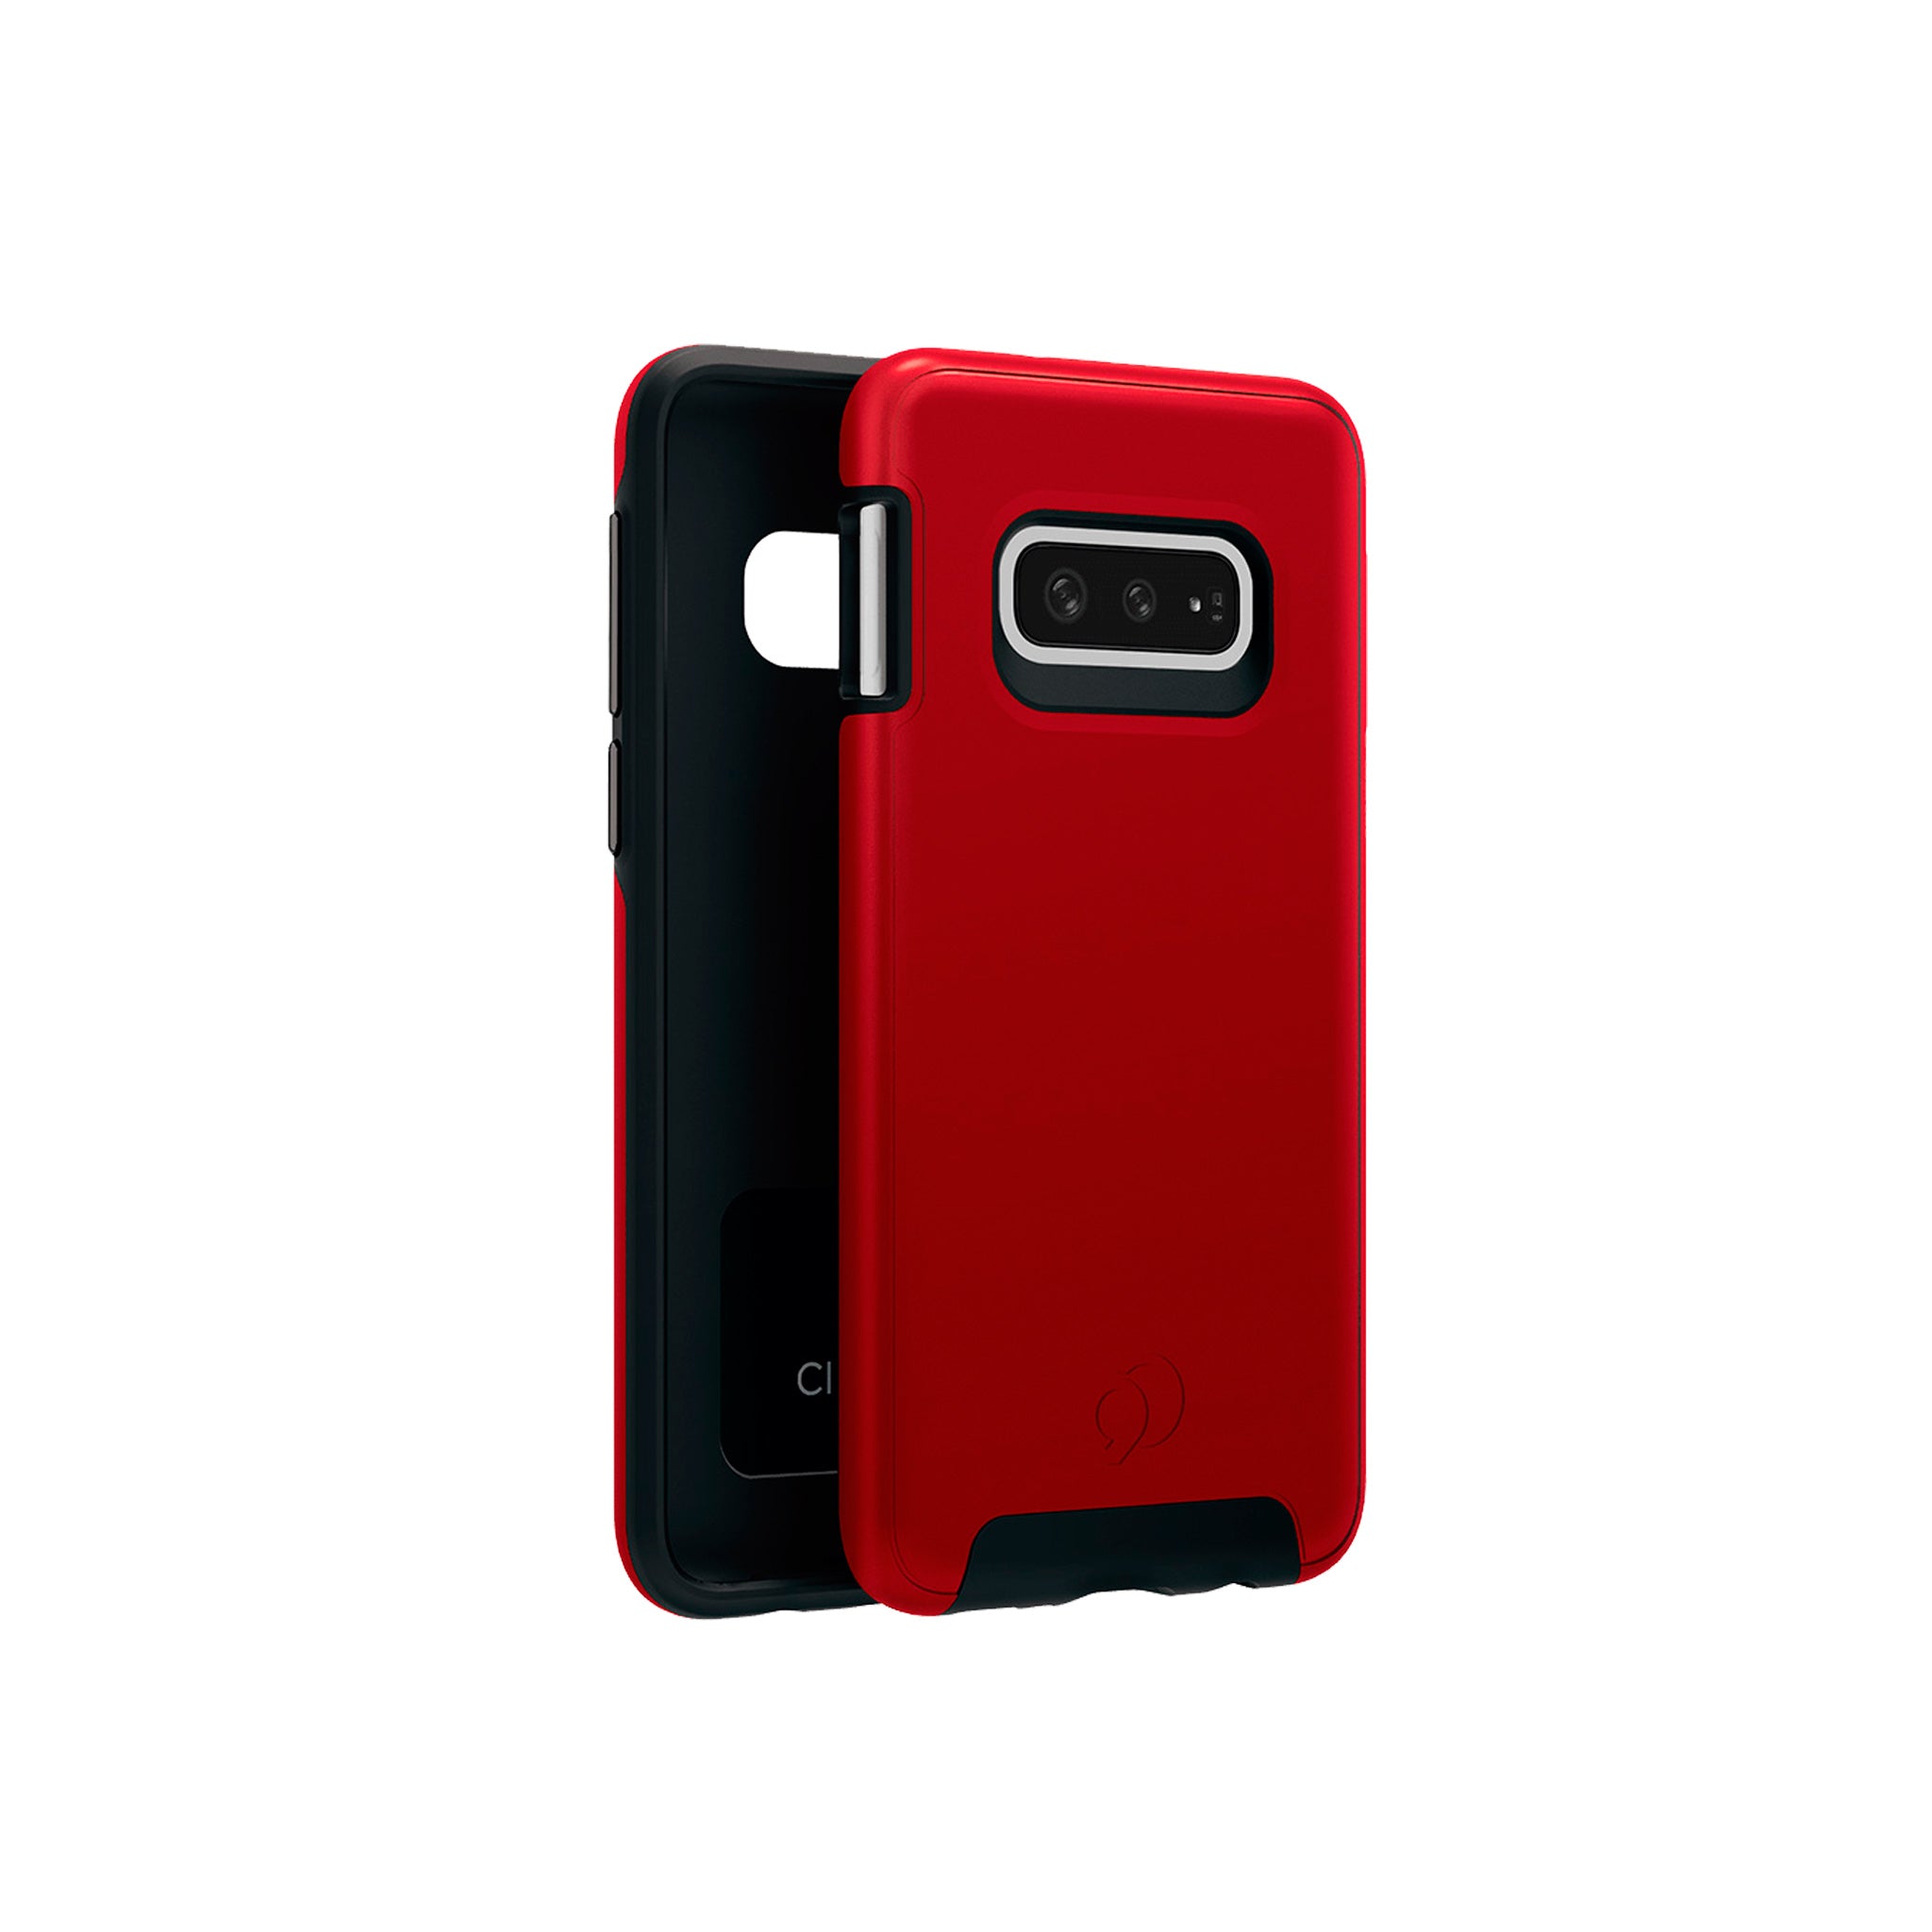 Nimbus9 - Cirrus 2 Case For Samsung Galaxy S10e - Crimson